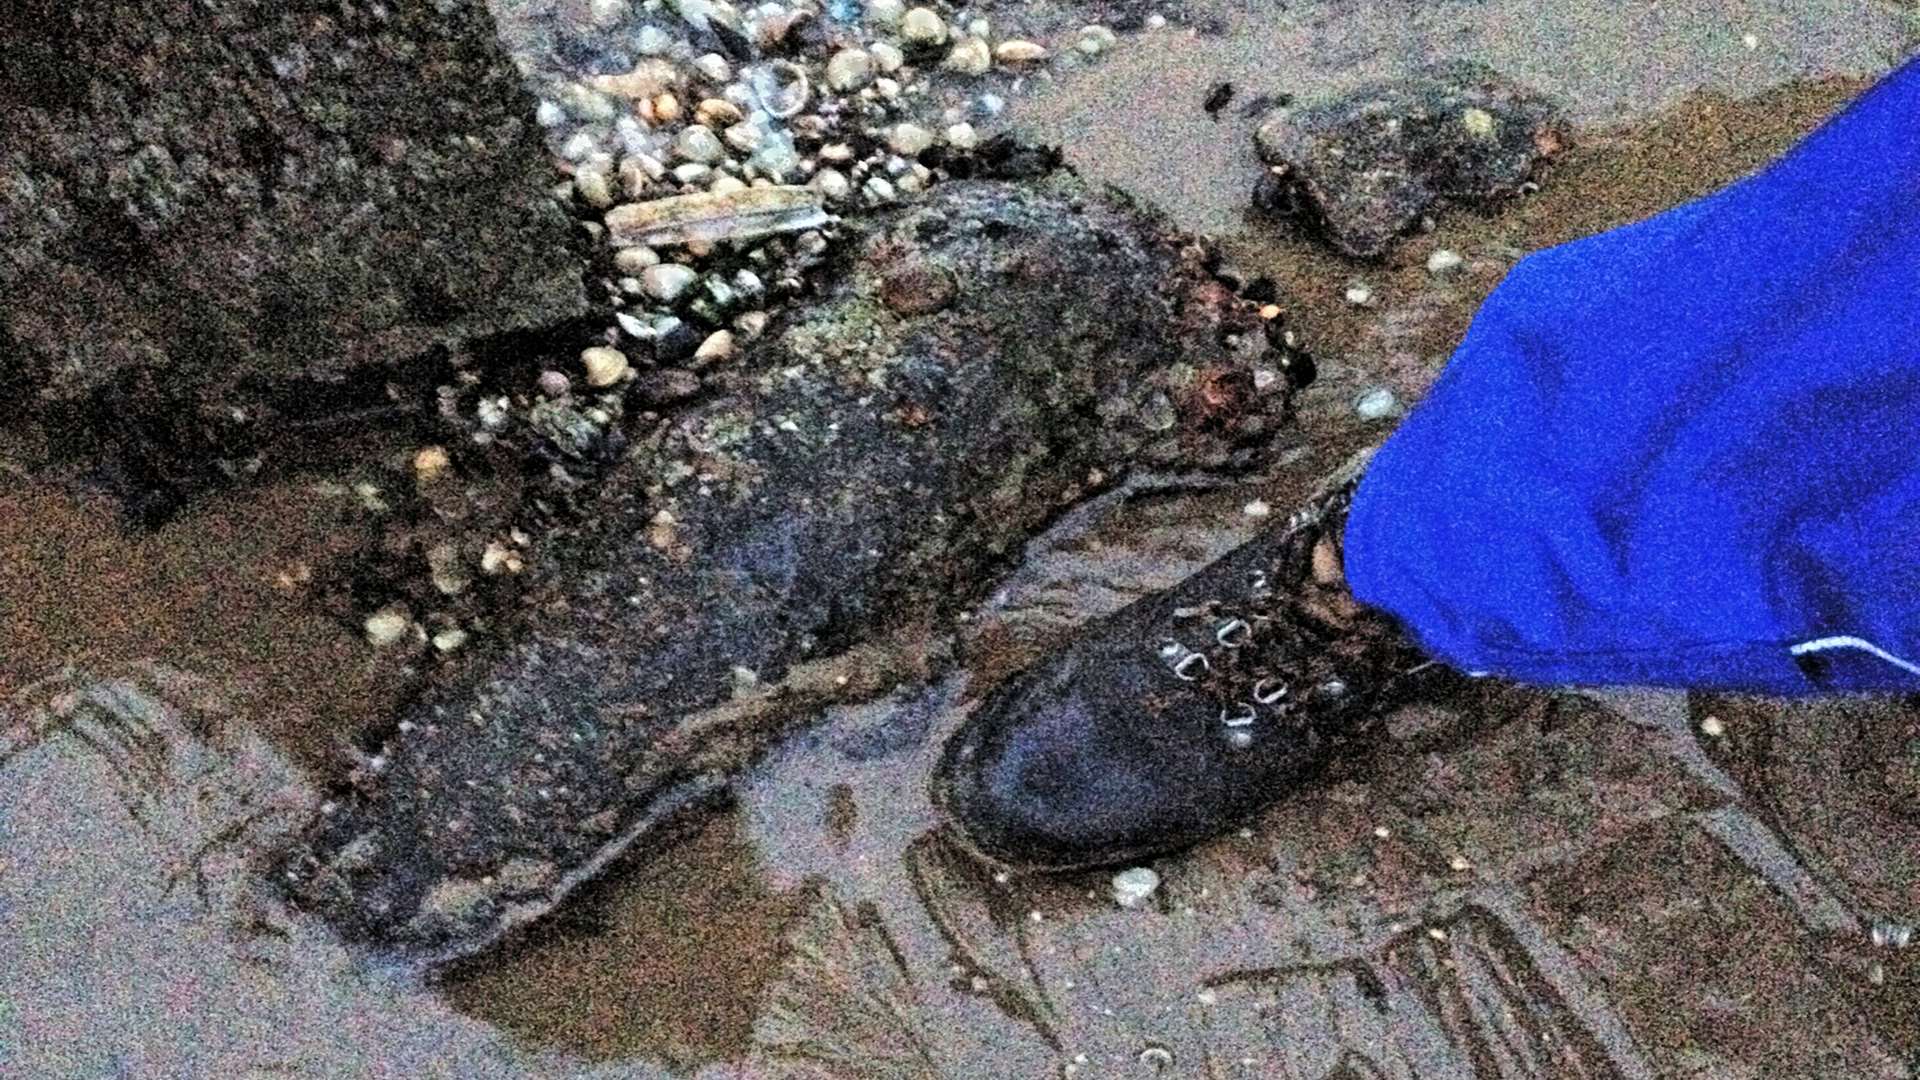 The explosive found on Shellness Beach